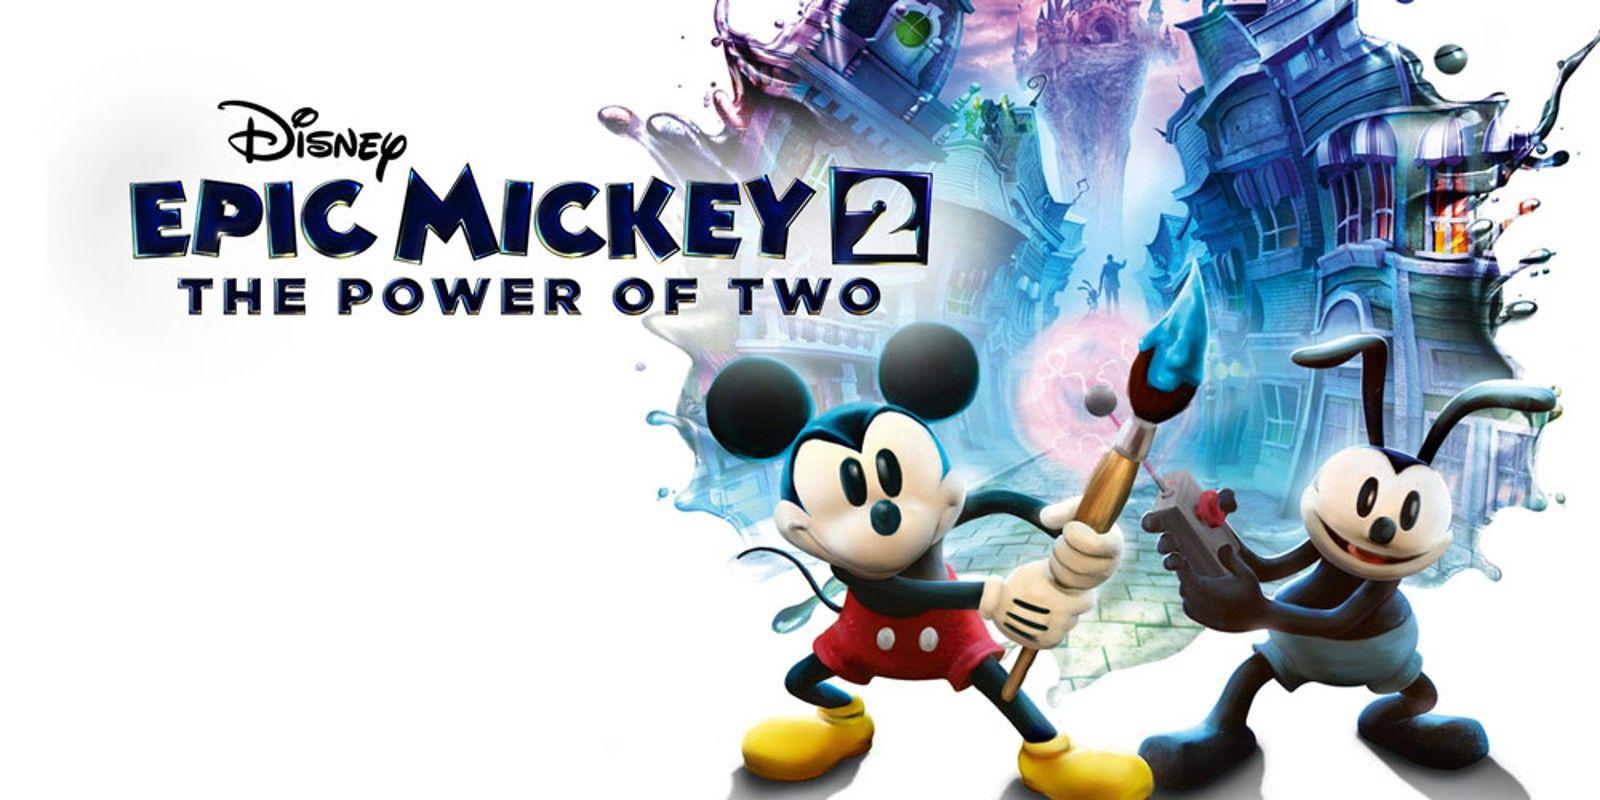 Epic Mickey 2 Logo - Disney Epic Mickey 2: The Power of Two | Wii U | Games | Nintendo